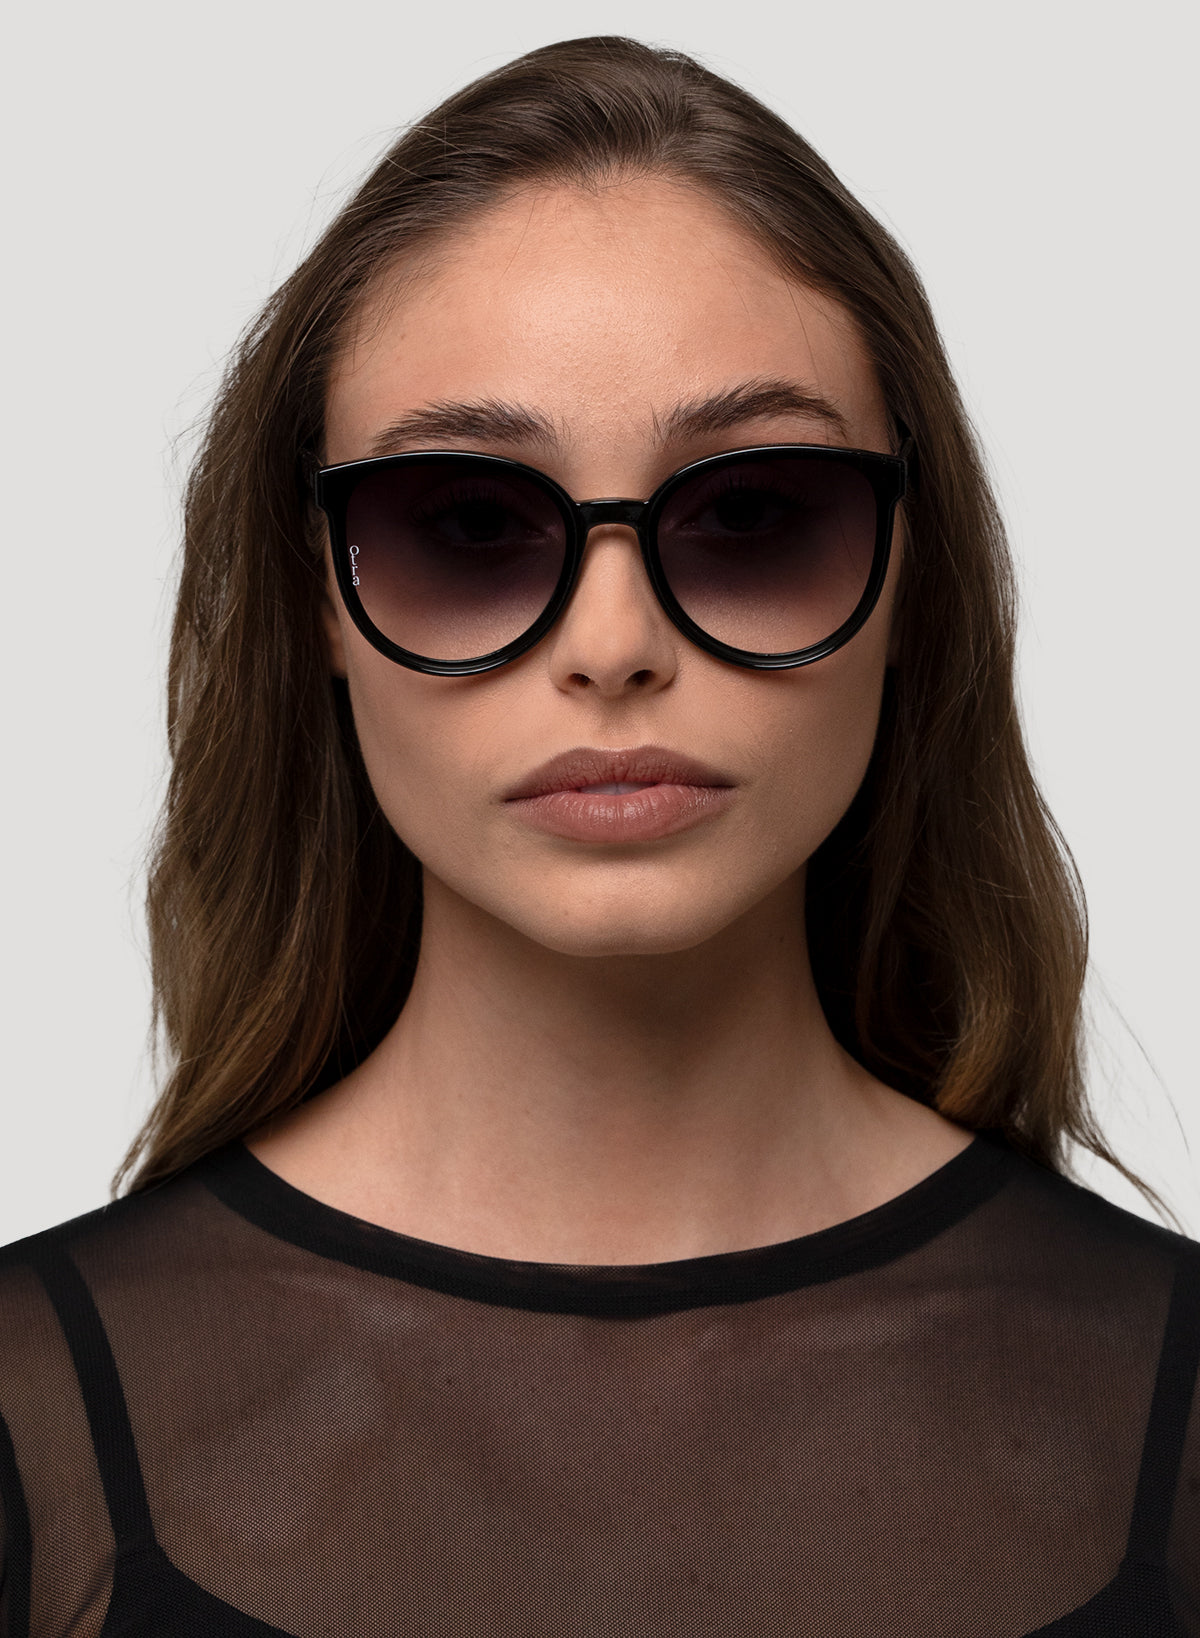 Model view of Dali oversized round sunglasses in black